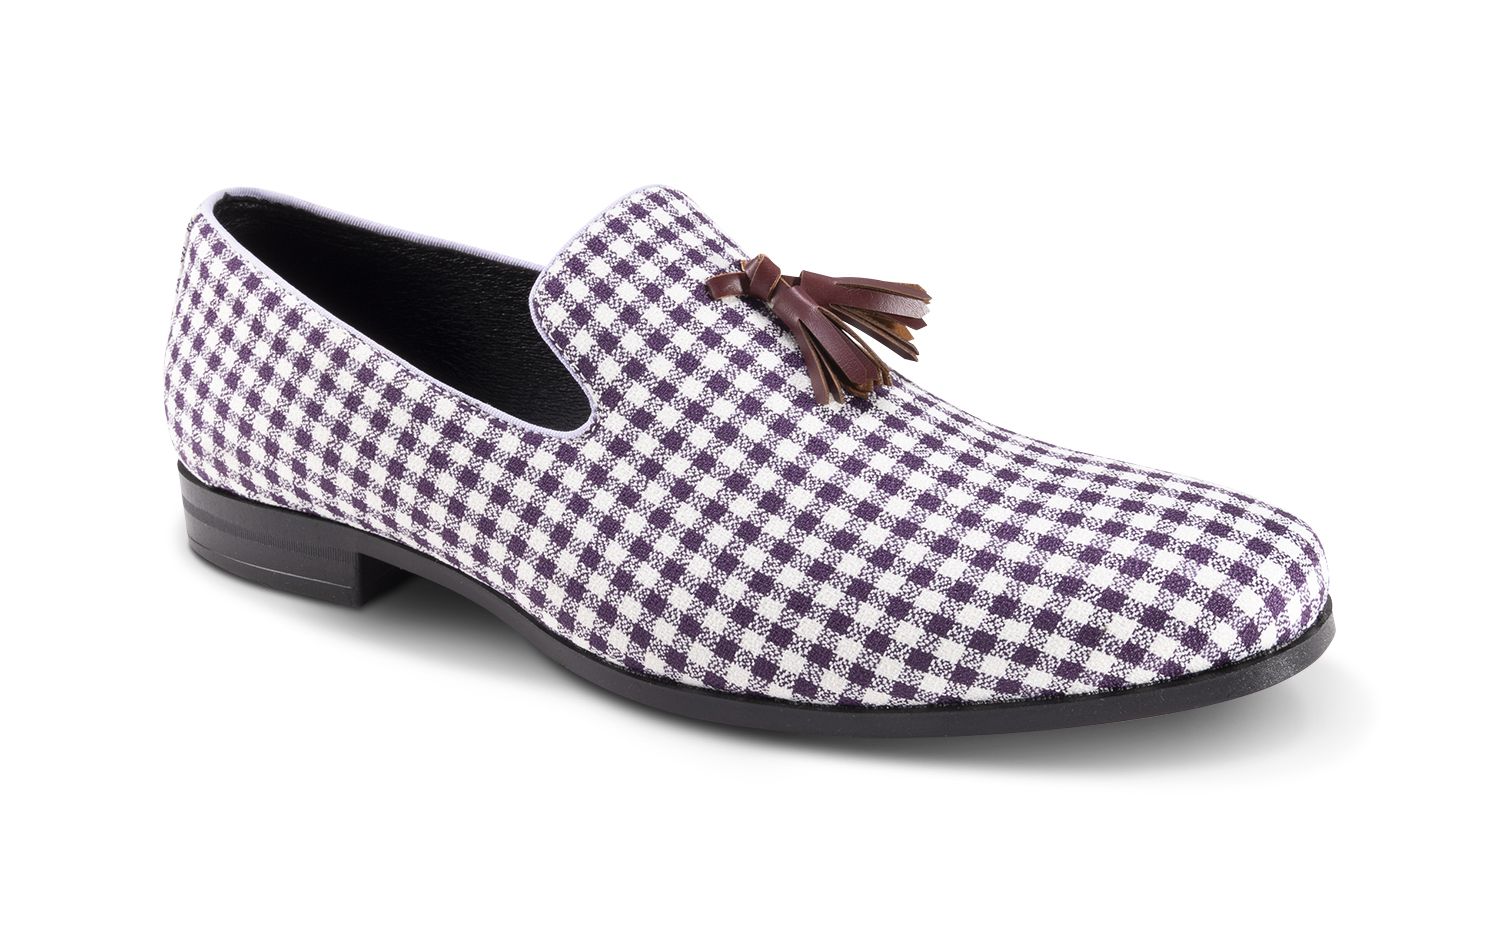 Montique Men's Fashion Loafer - Textured Plaid